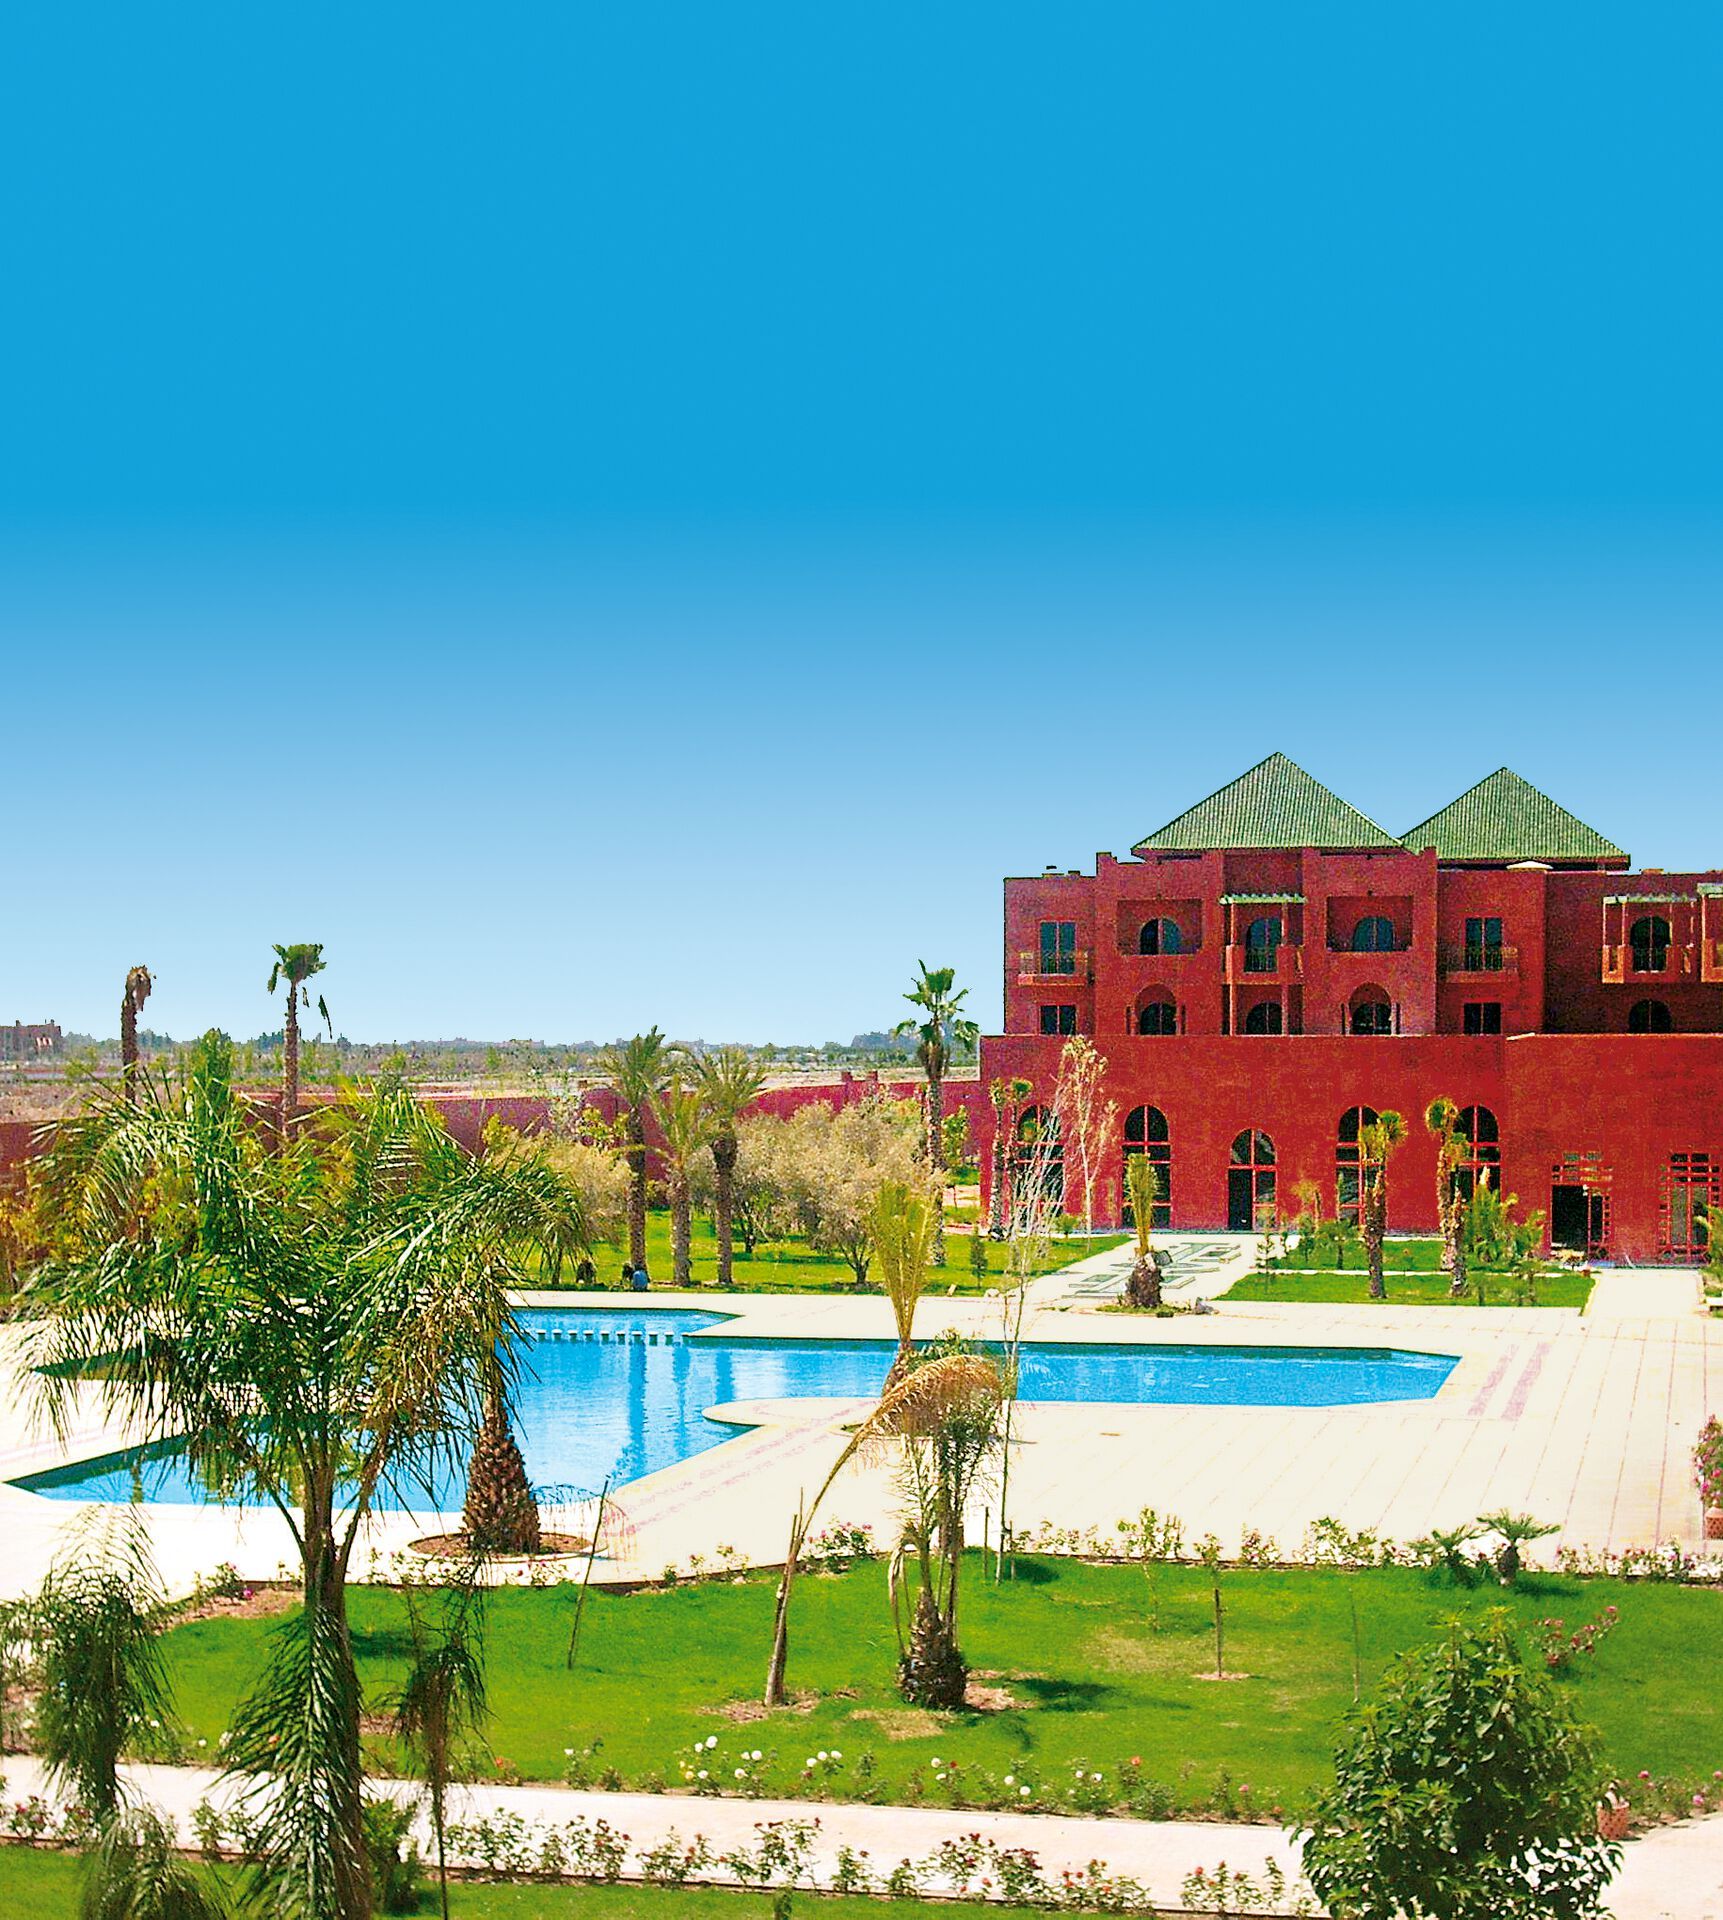 Maroc - Marrakech - Hotel Palm Plaza 5*